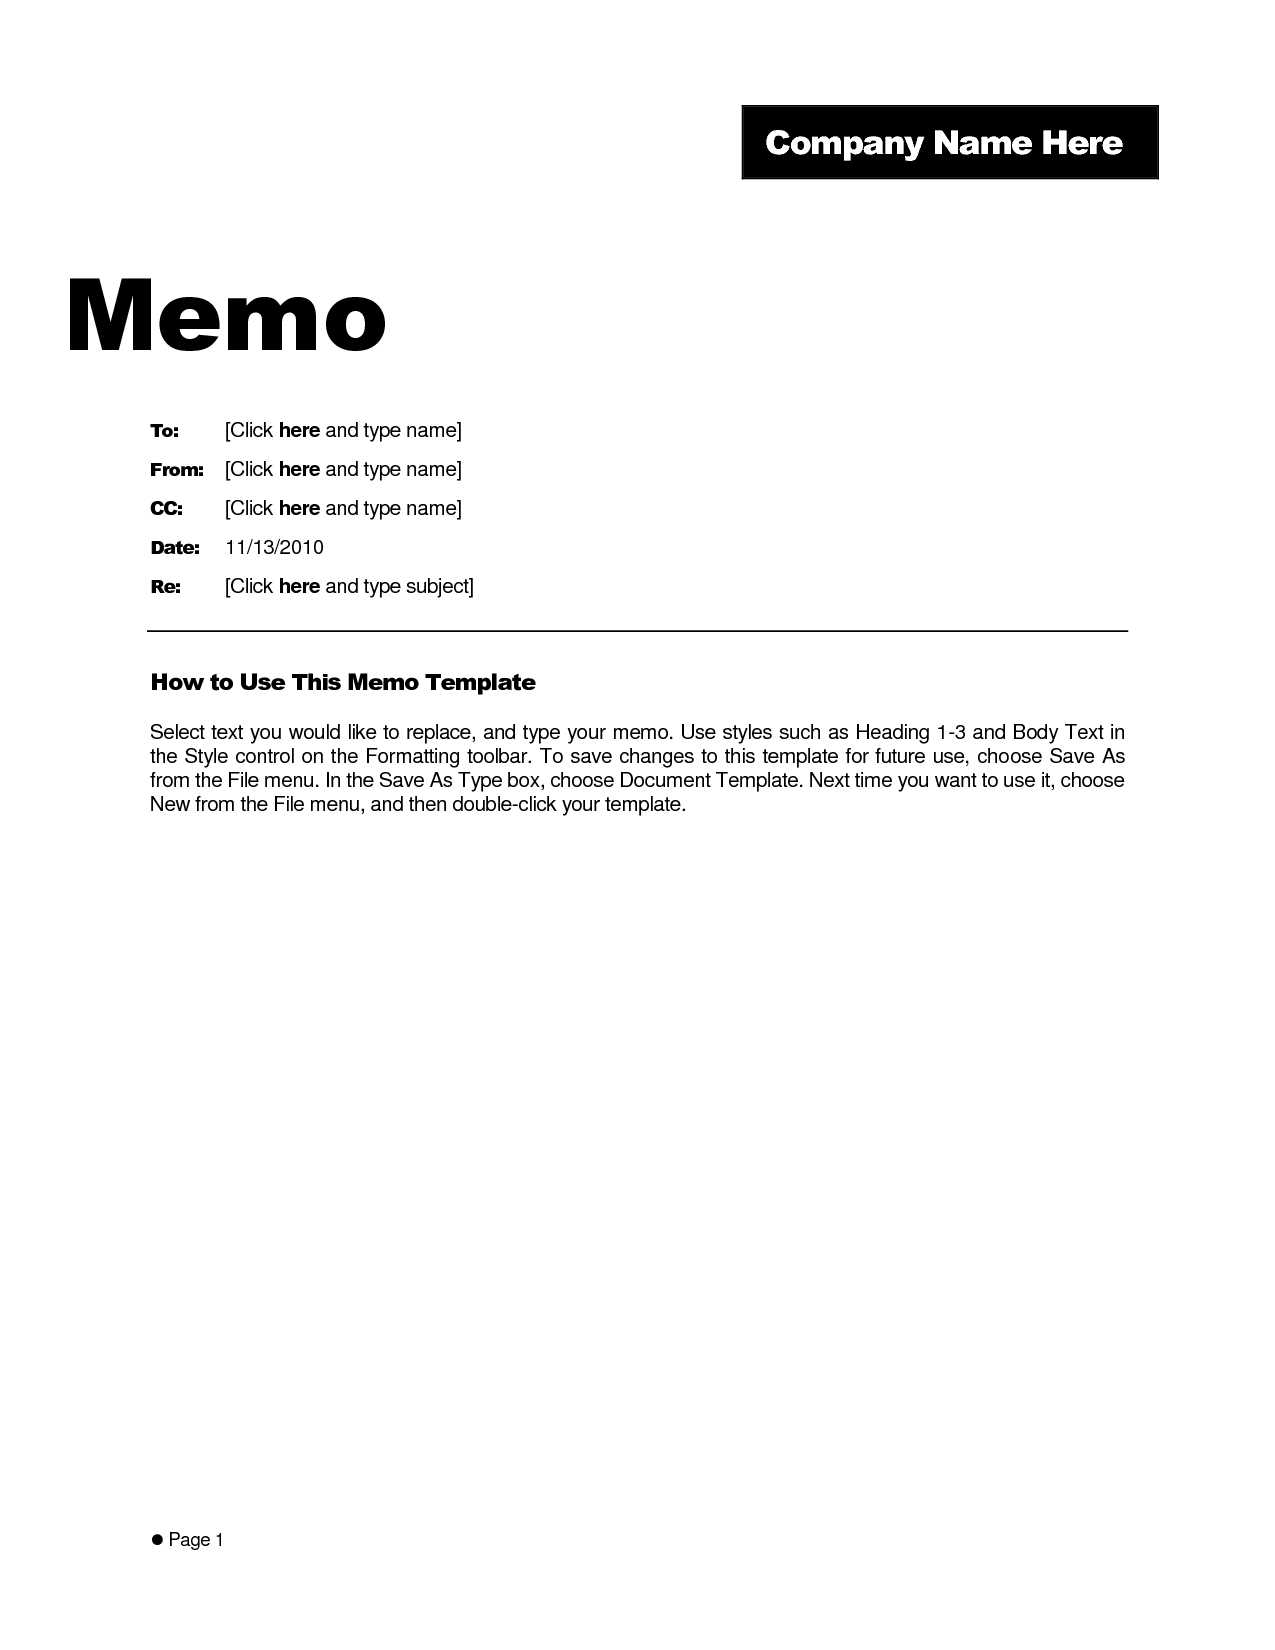 Free Memo Template Word 2010 – Kerren Throughout Memo Template Word 2013